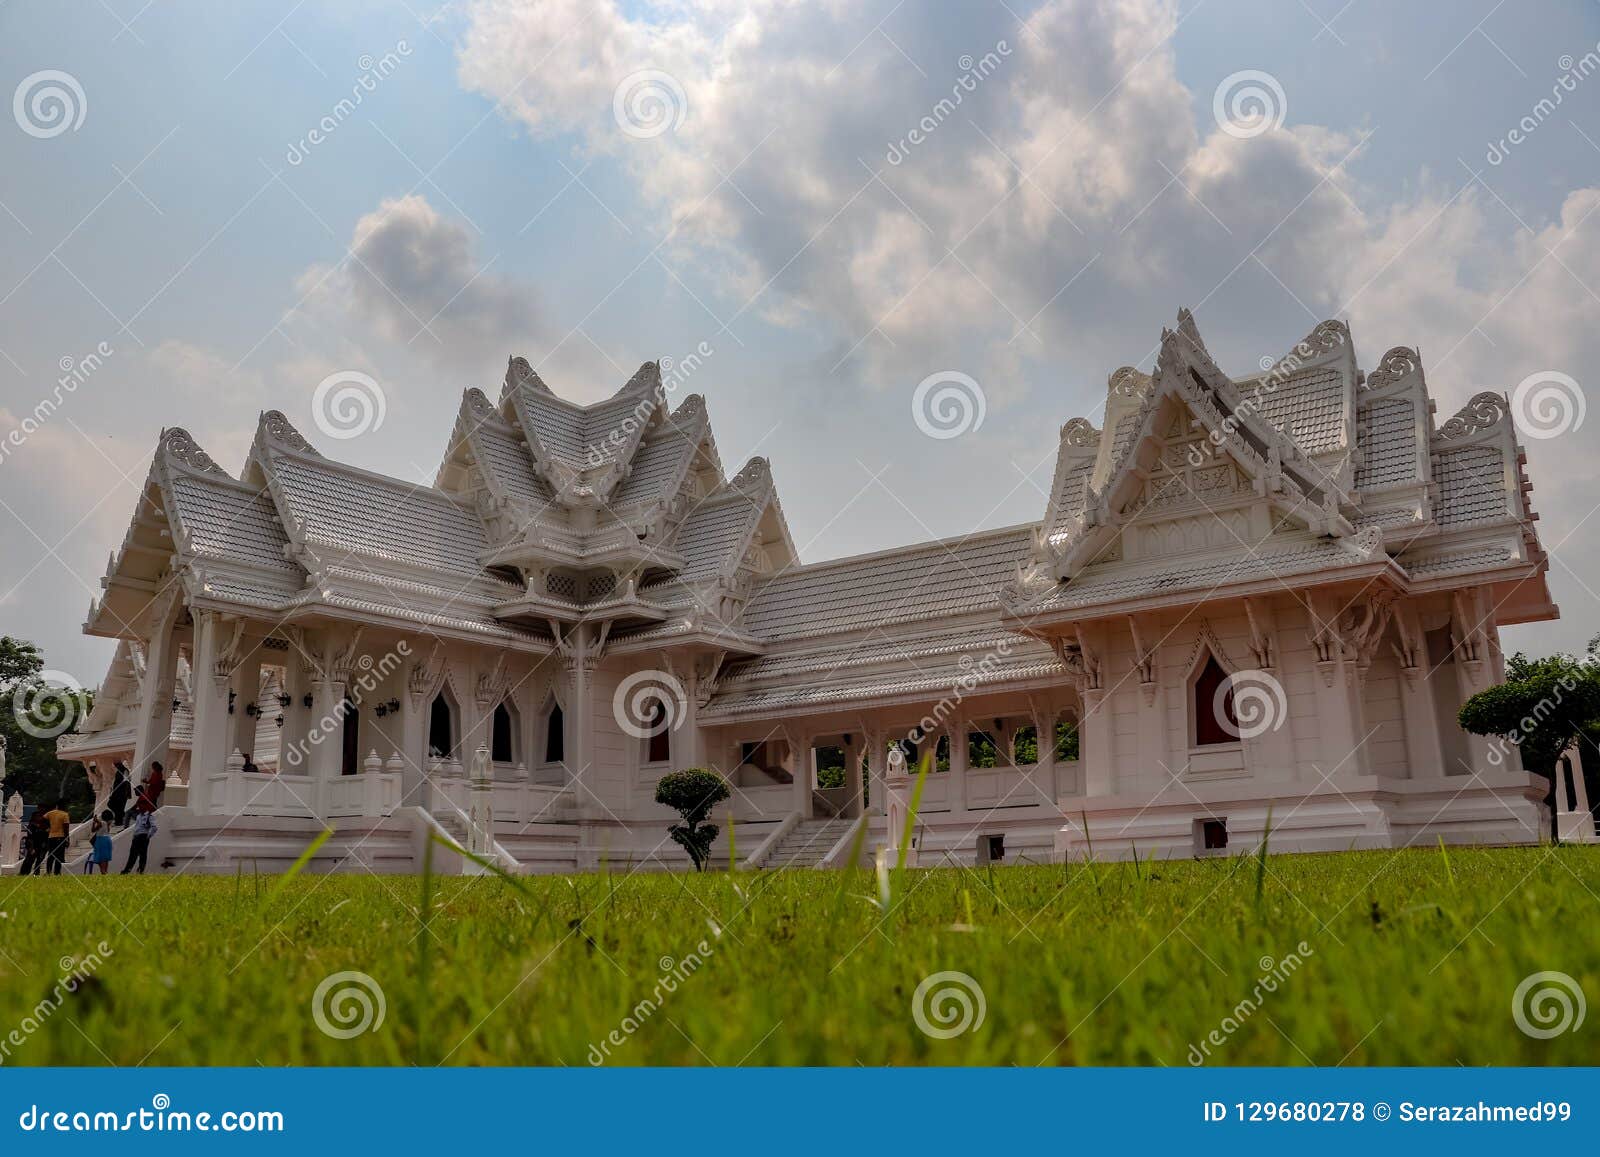 royal thai monastery in lumbini, nepal